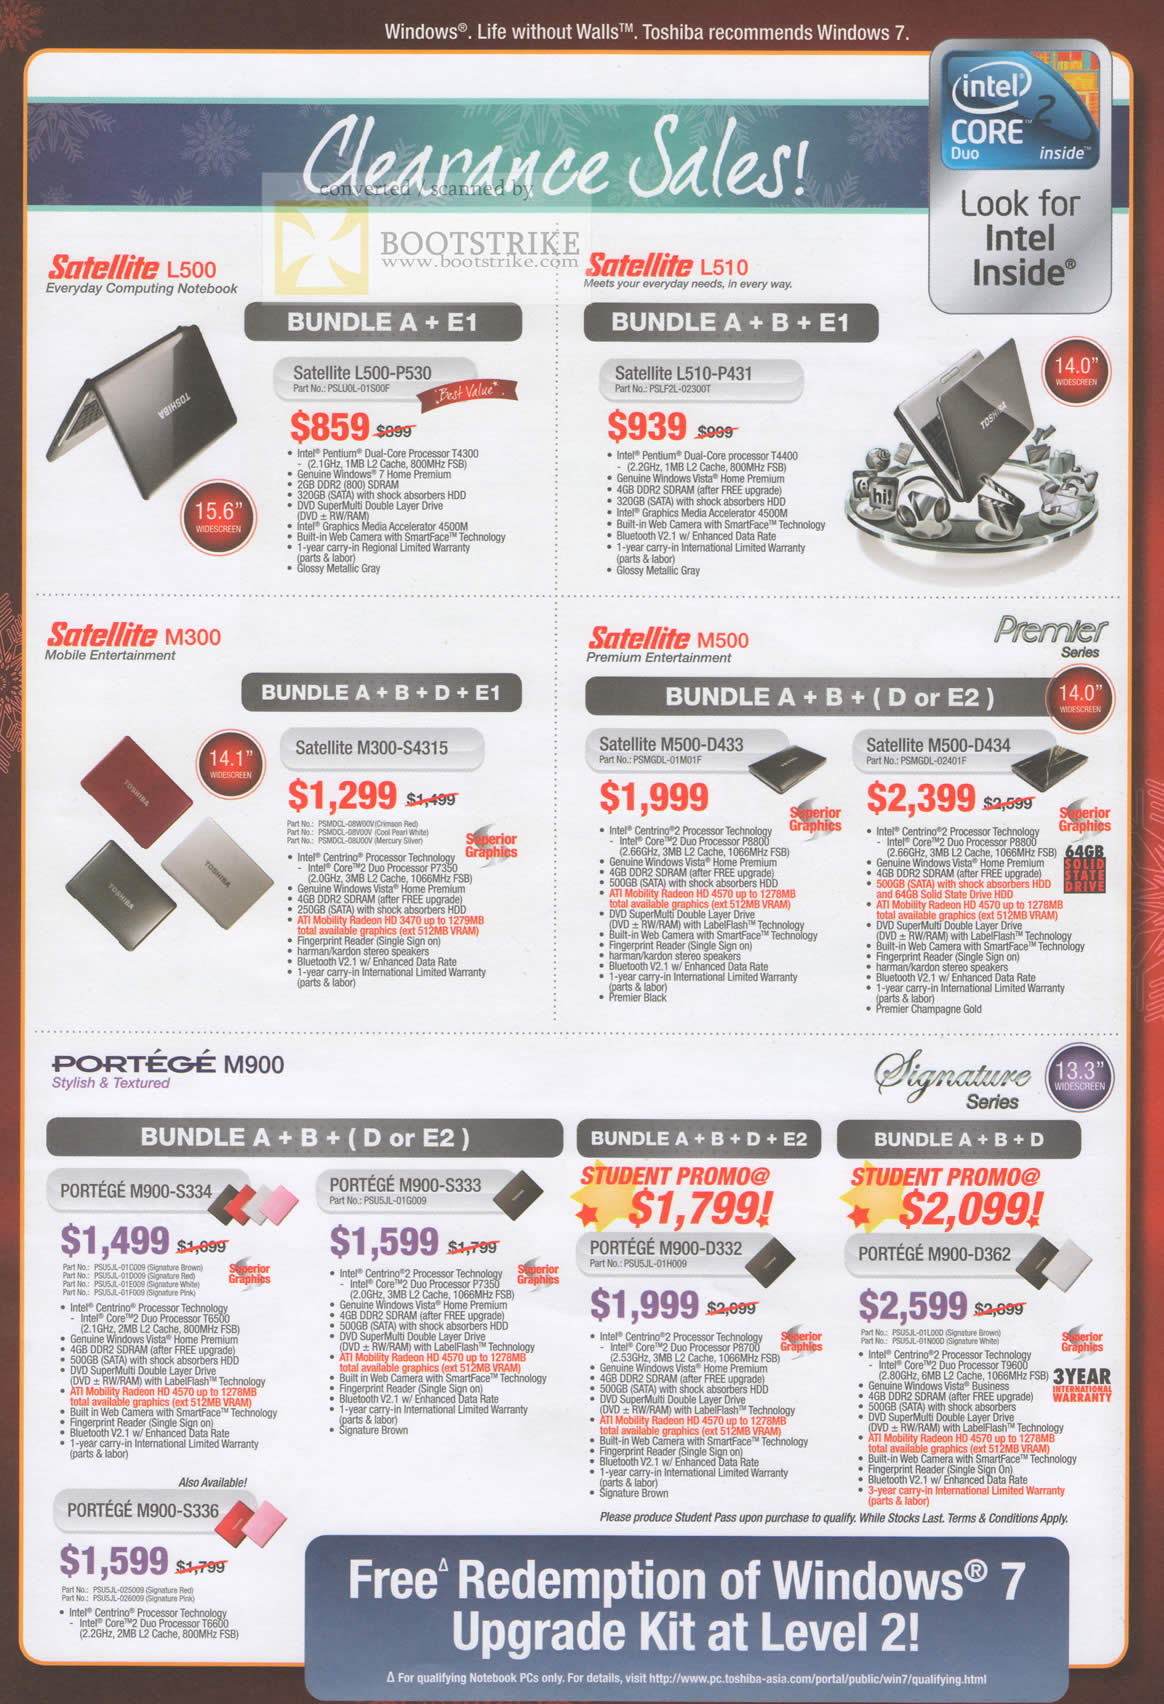 Sitex 2009 price list image brochure of Toshiba Notebooks Satellite L500 L510 M300 M500 Portege M900 Student